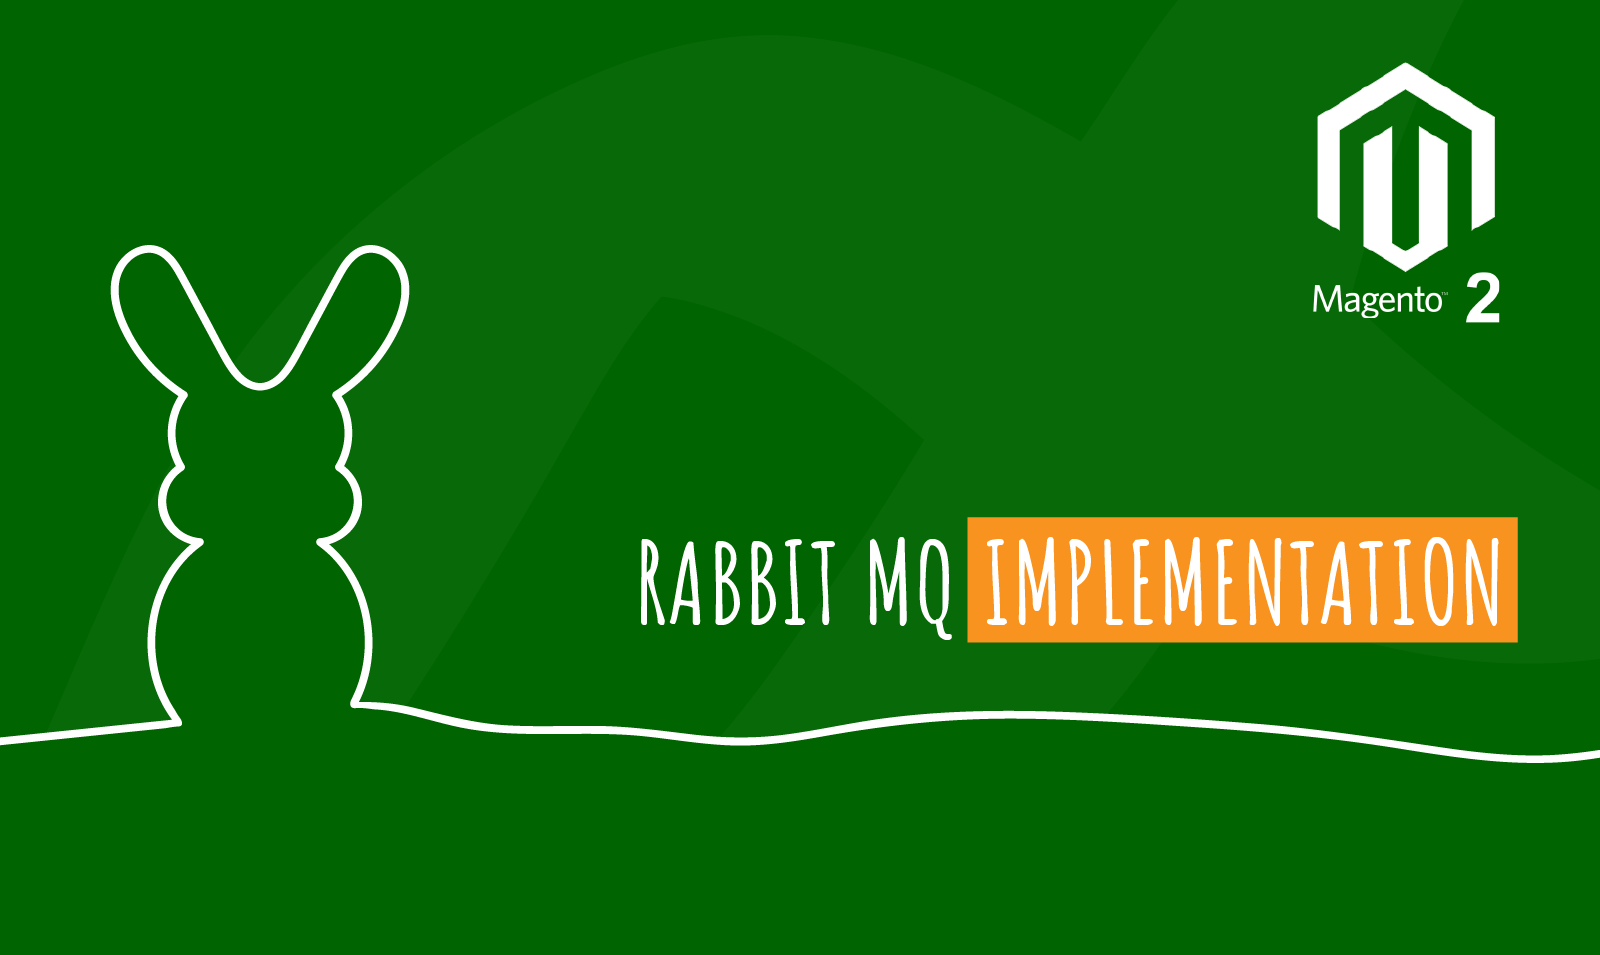 Magento 2 - Rabbit MQ Implementation